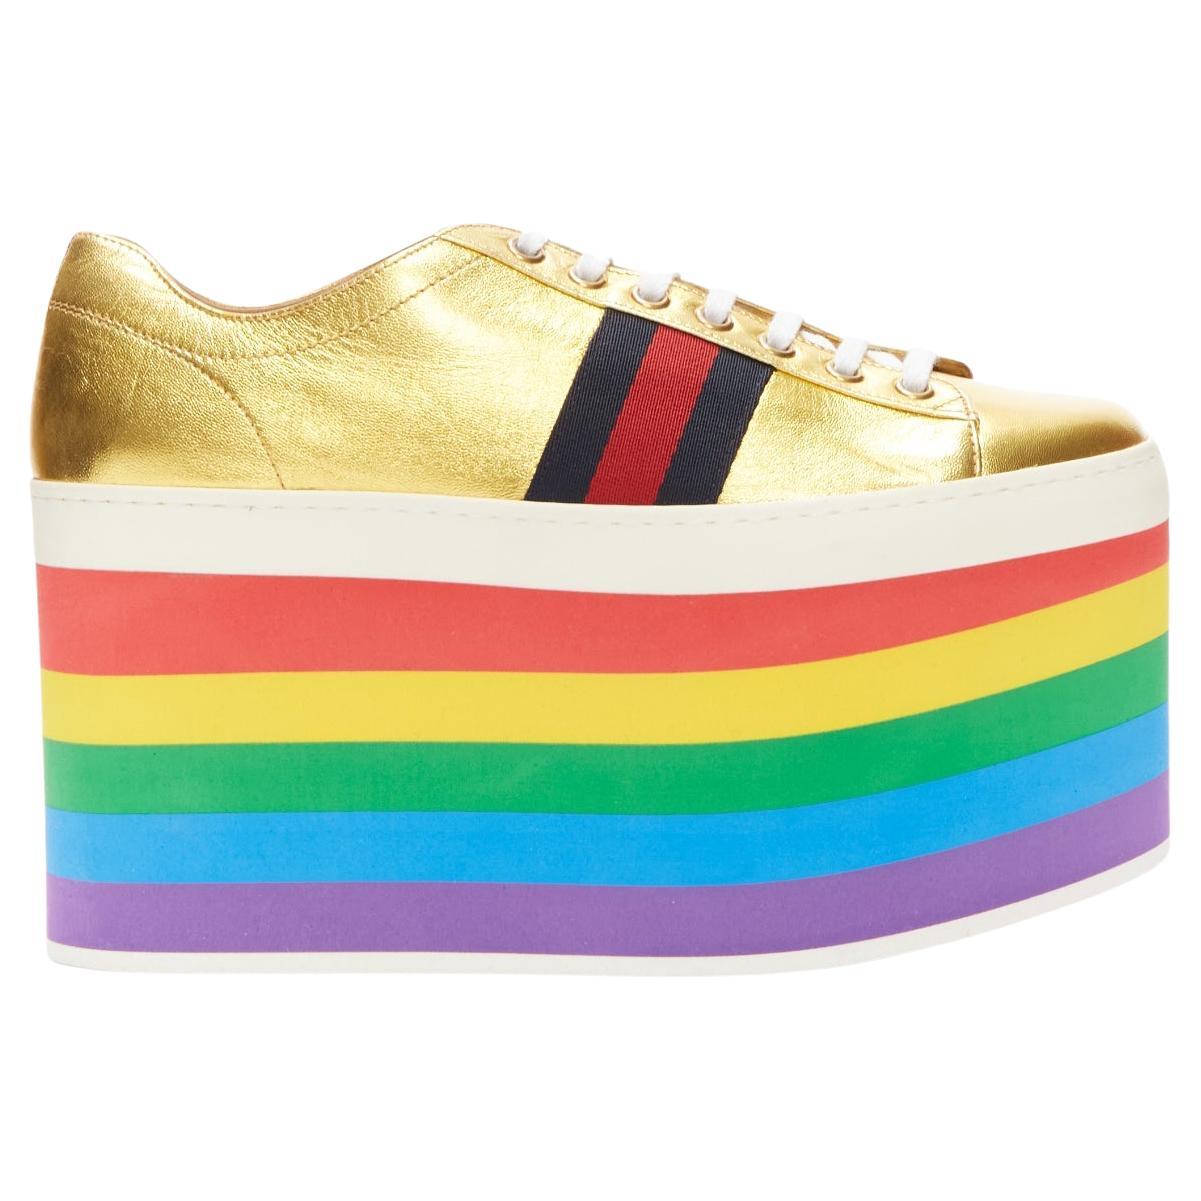 GUCCI Alessandro Michele Peggy rainbow gold web platform sneakers EU37.5